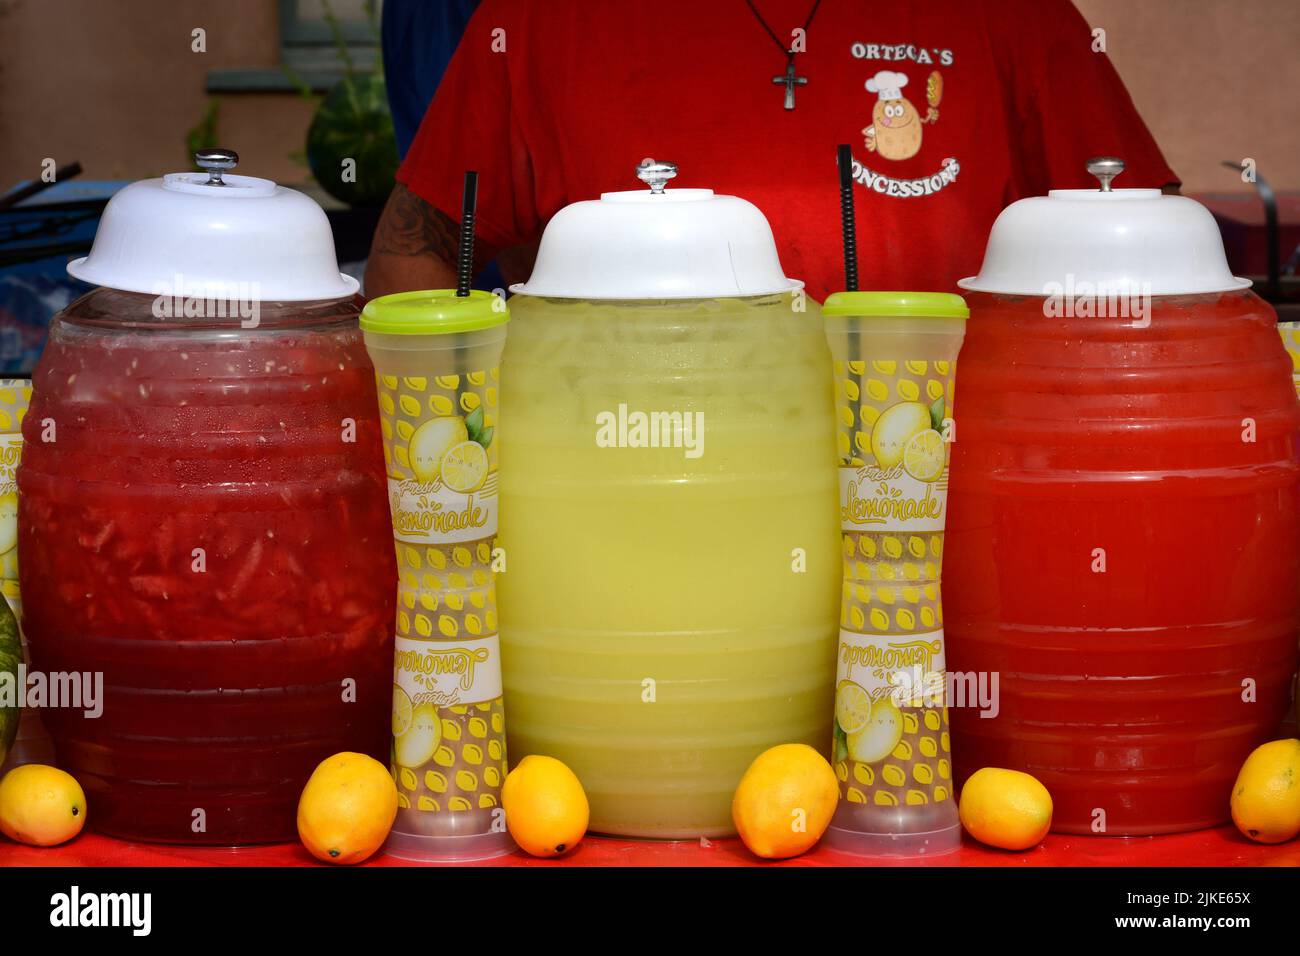 https://c8.alamy.com/comp/2JKE65X/a-food-vendor-sells-lemonade-and-watermelon-juice-beverages-at-an-outdoor-festival-in-santa-fe-new-mexico-2JKE65X.jpg